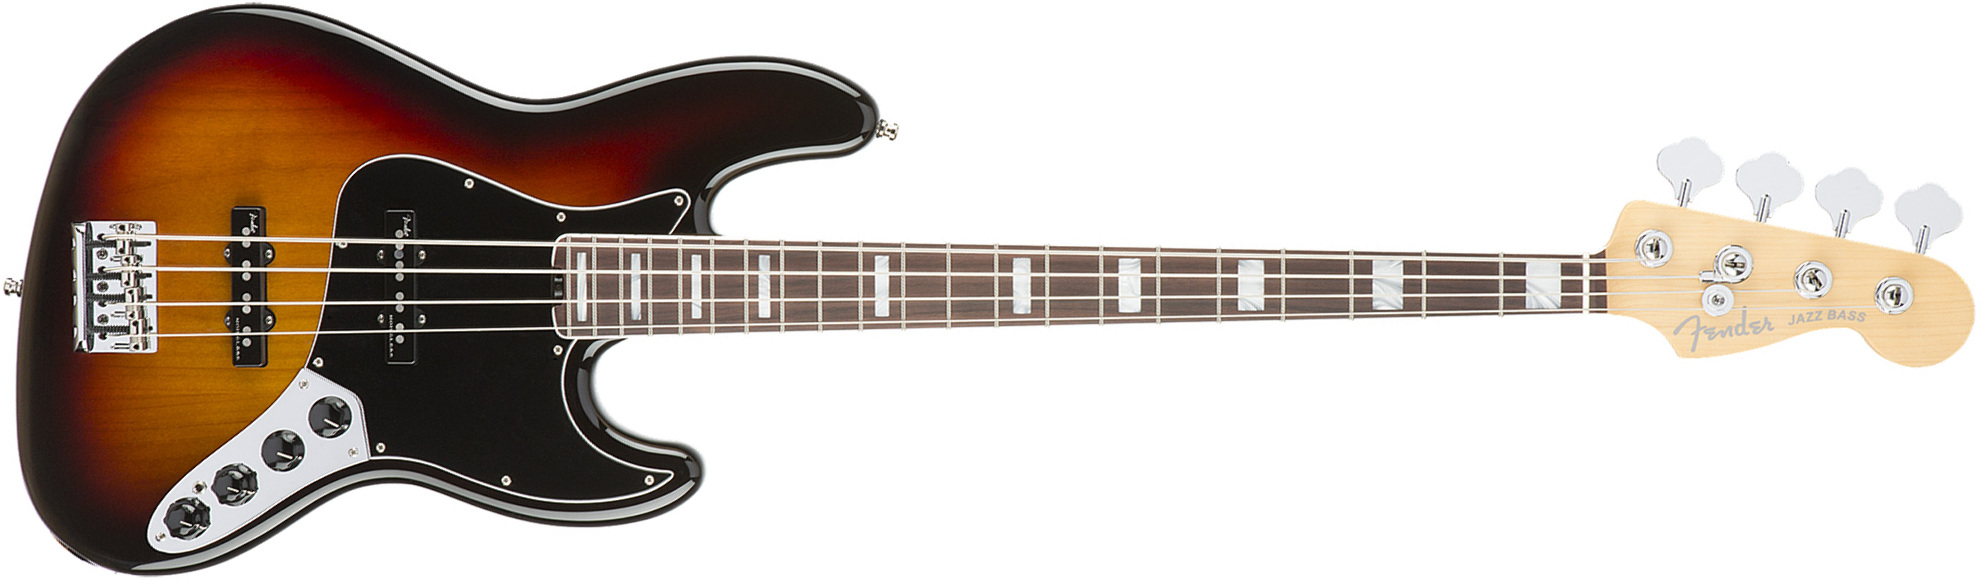 Fender Jazz Bass American Elite 2016 (usa, Rw) - 3-color Sunburst - Solidbody E-bass - Main picture